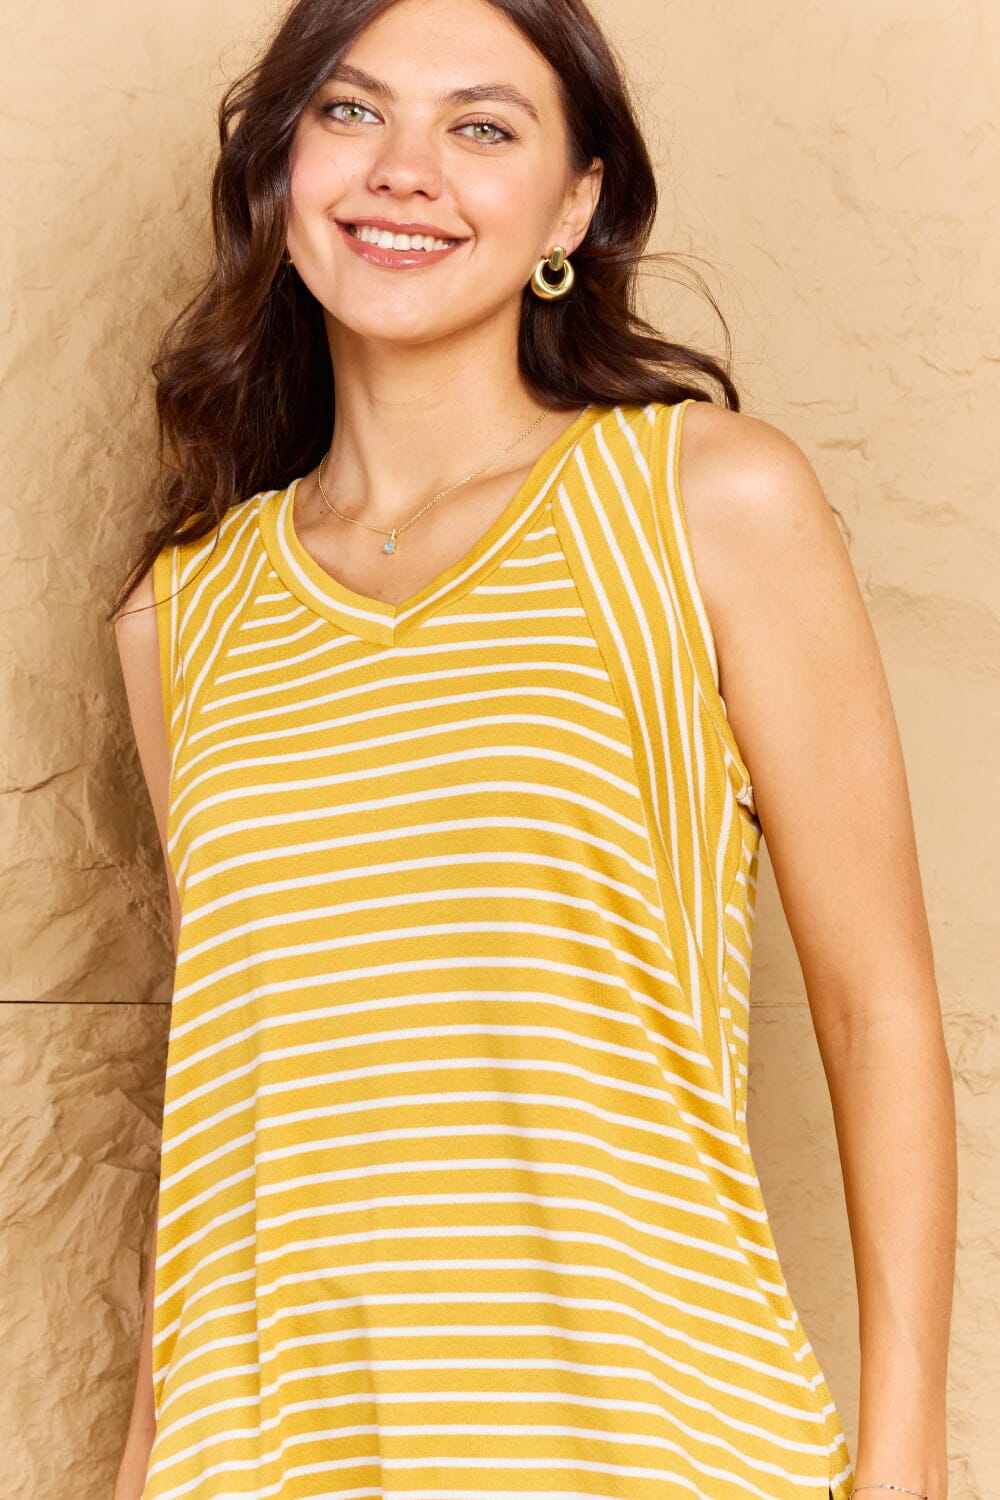 Doublju Yellow Striped Sleeveless V-Neck Top Shirts & Tops jehouze 